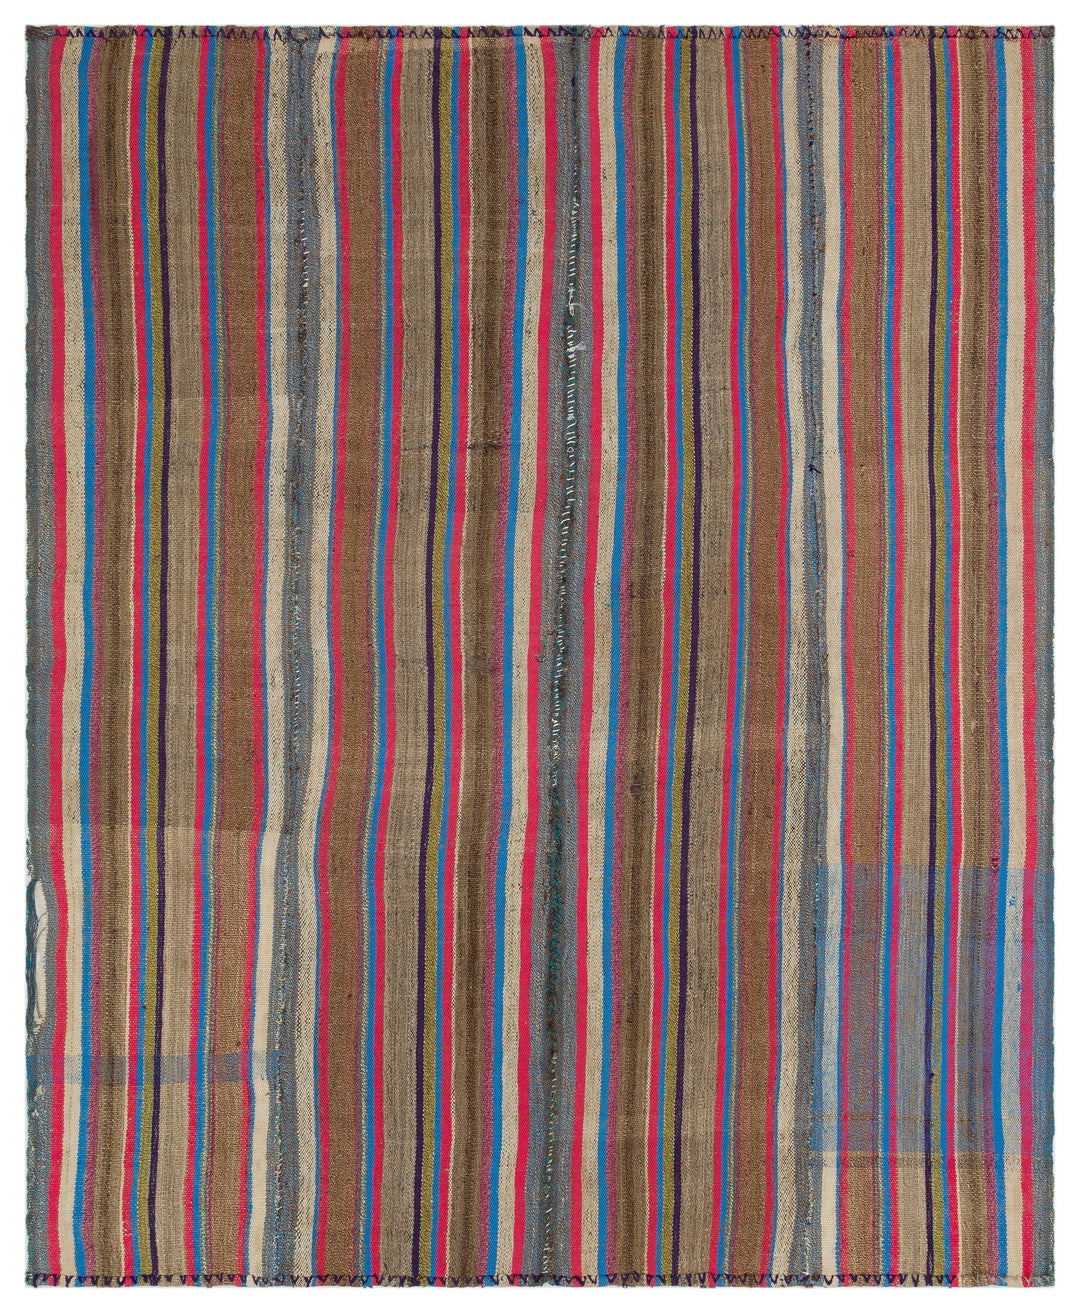 Cretan Beige Striped Wool Hand-Woven Carpet 182 x 232